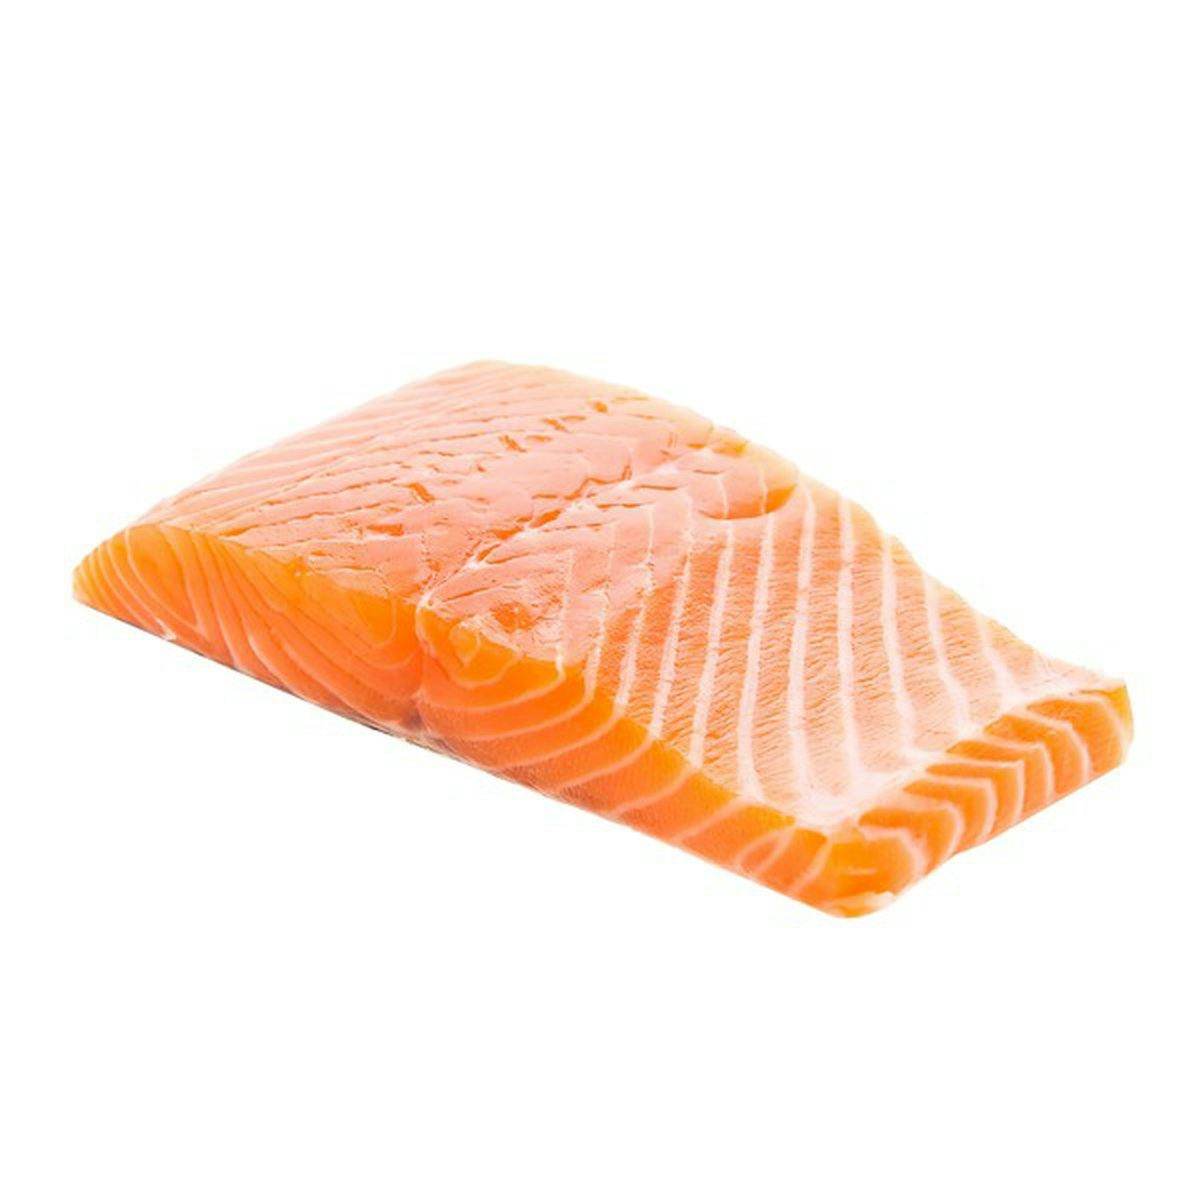 6oz king salmon portions